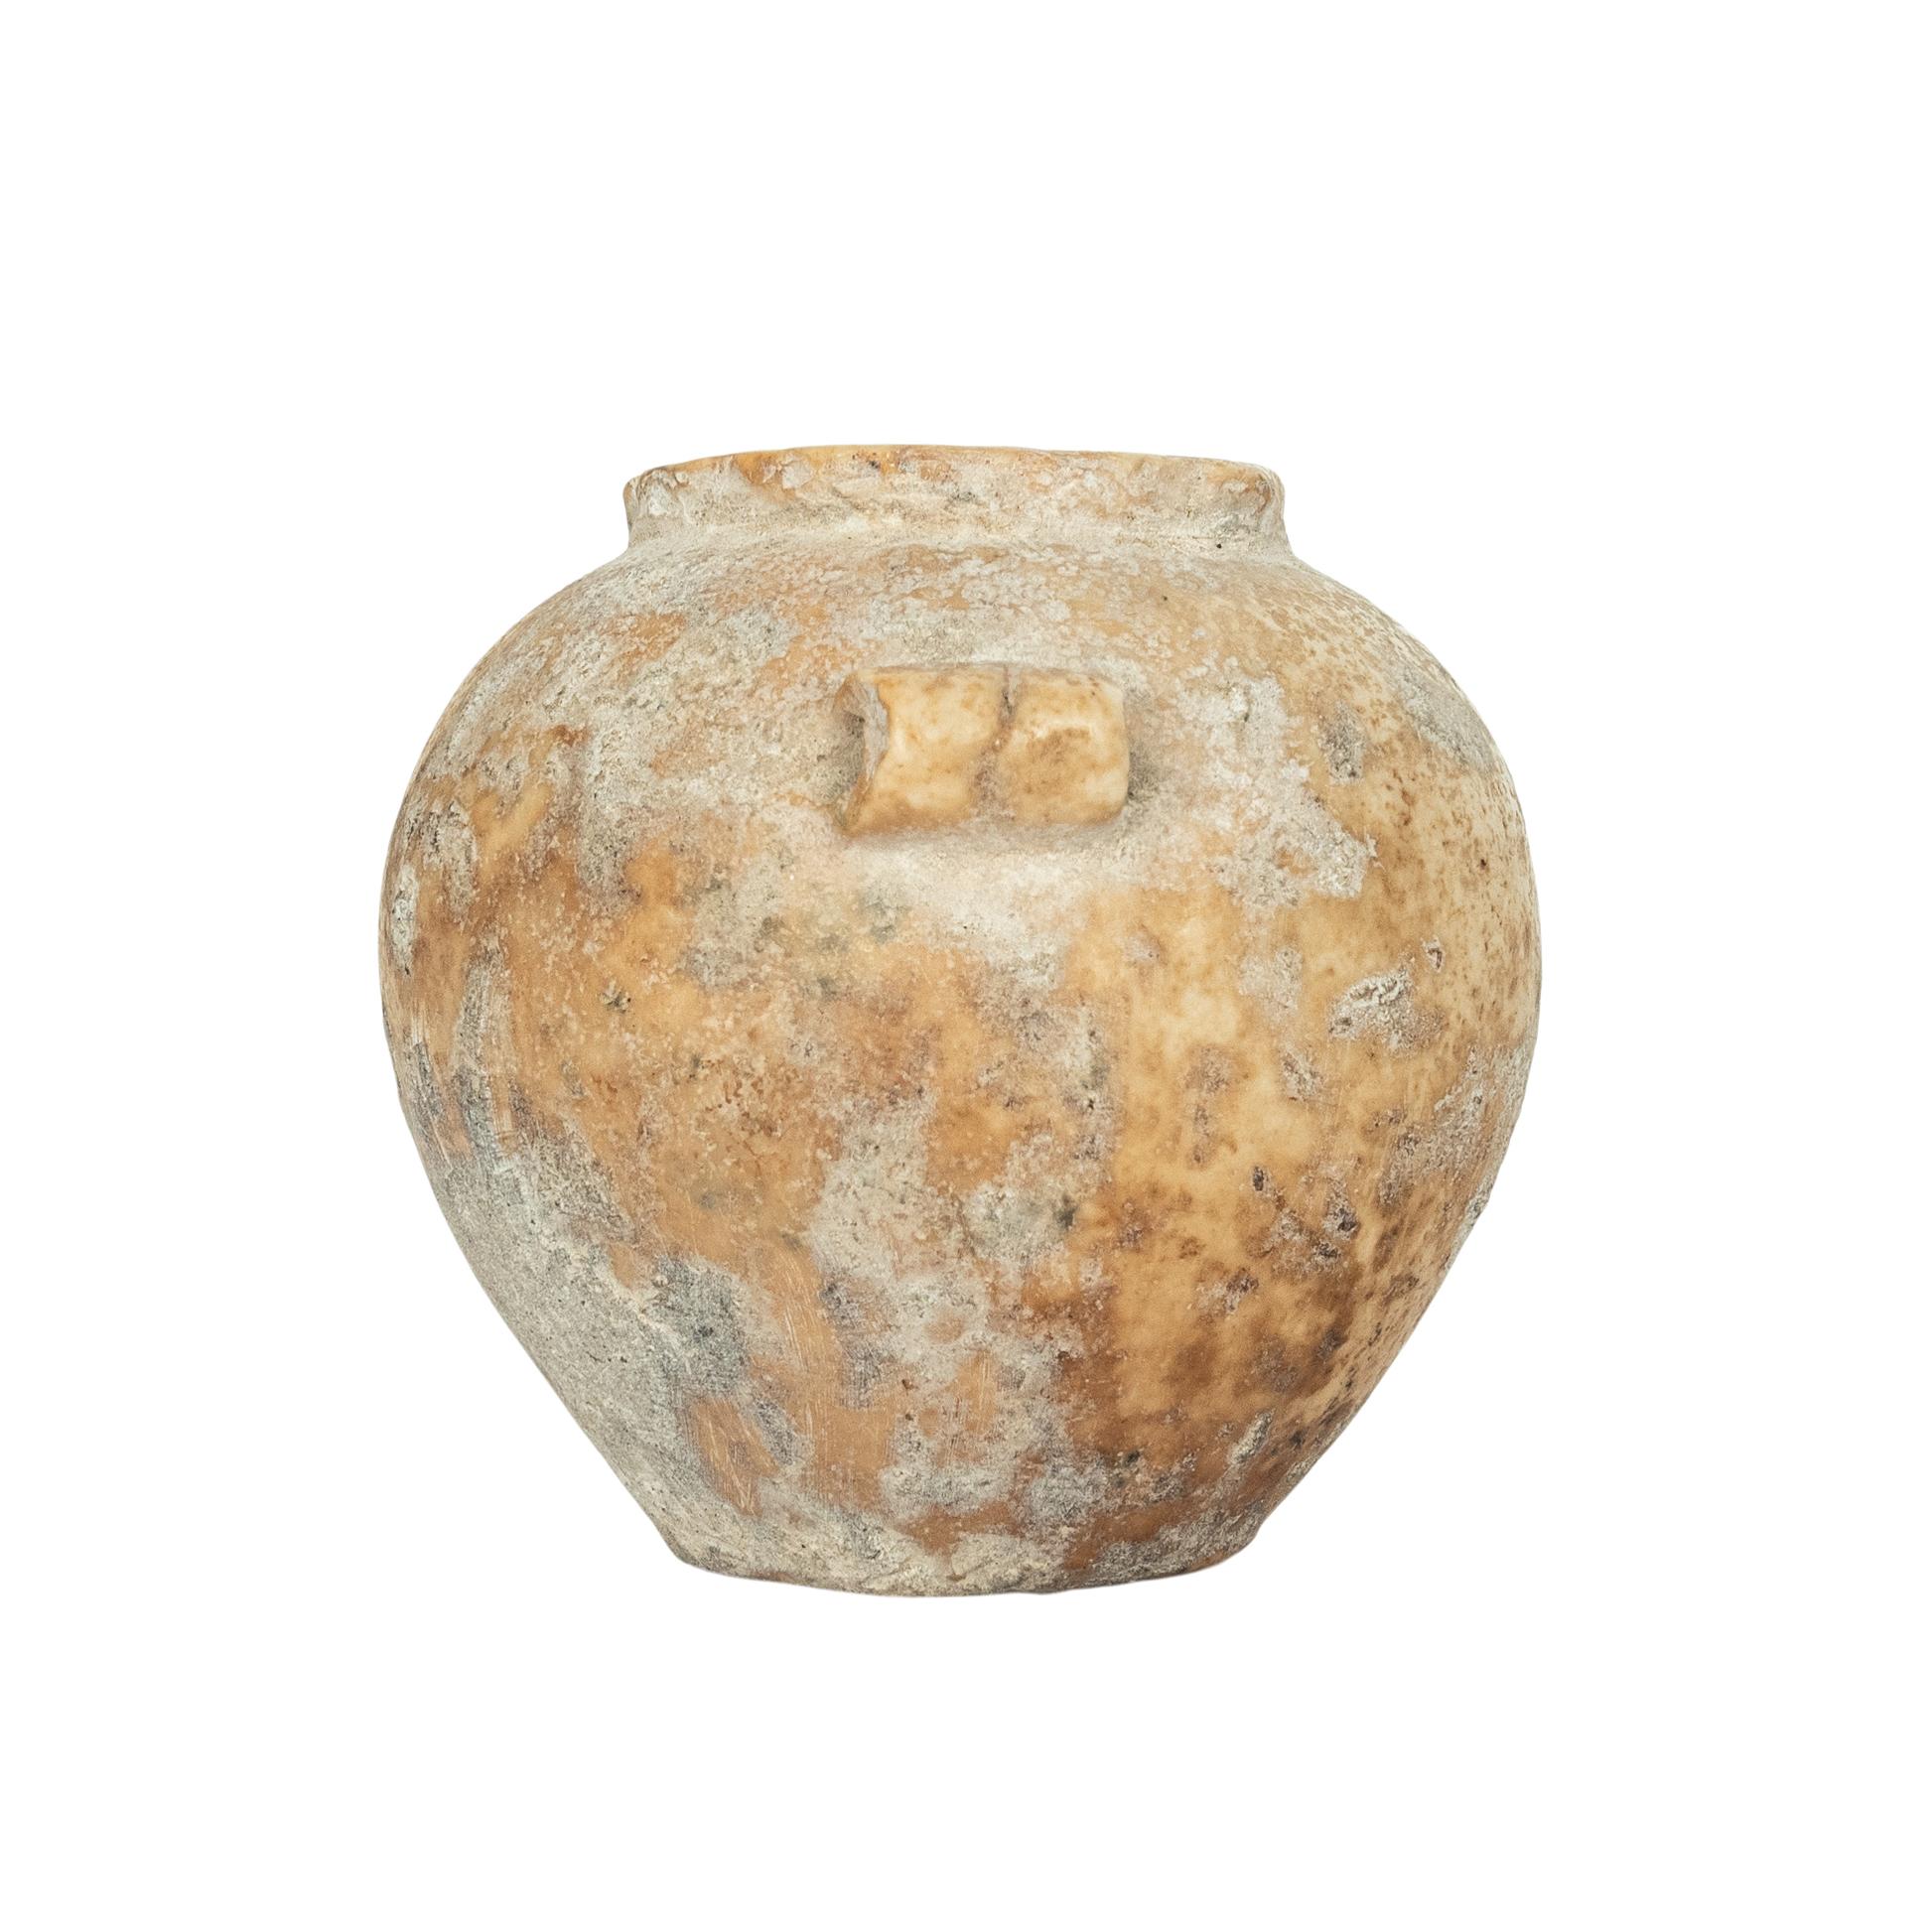 Ancient Egyptian Old Kingdom Miniature Lime Stone Vessel Jar 2600-2800 BCE For Sale 2